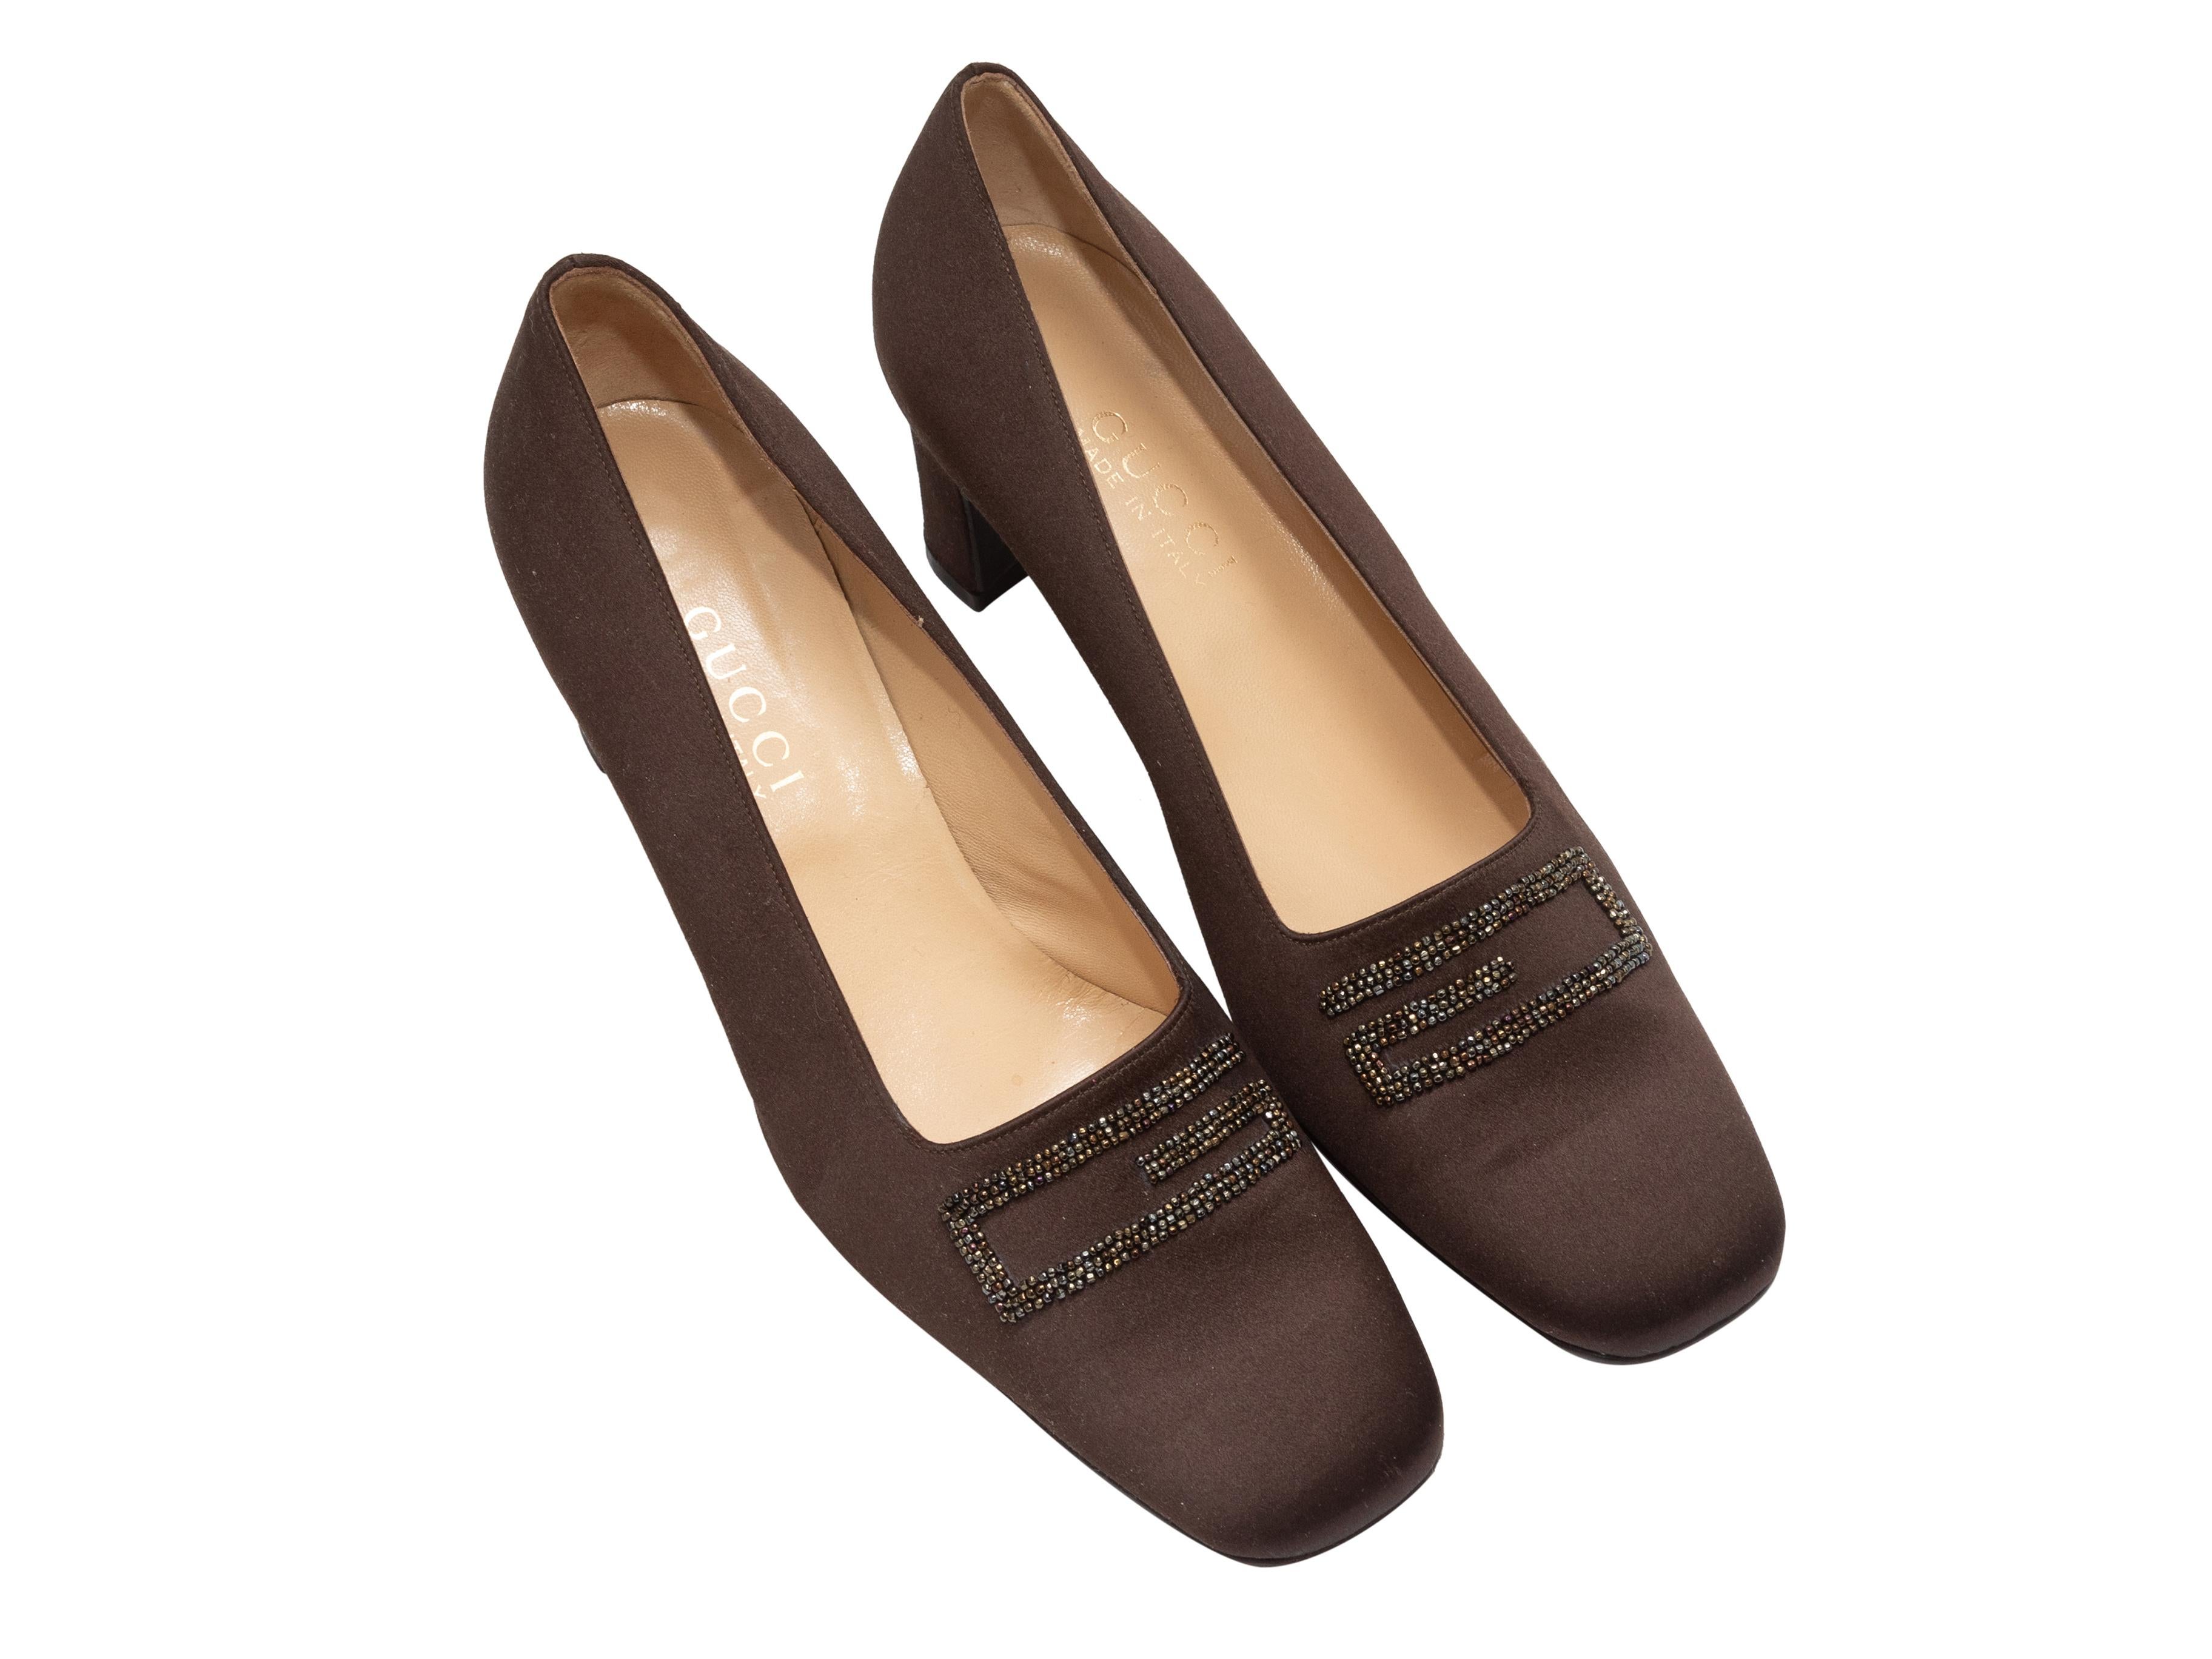 Brown satin square-toe pumps by Gucci. Beaded logo detailing at tops. Block heels. 2.3